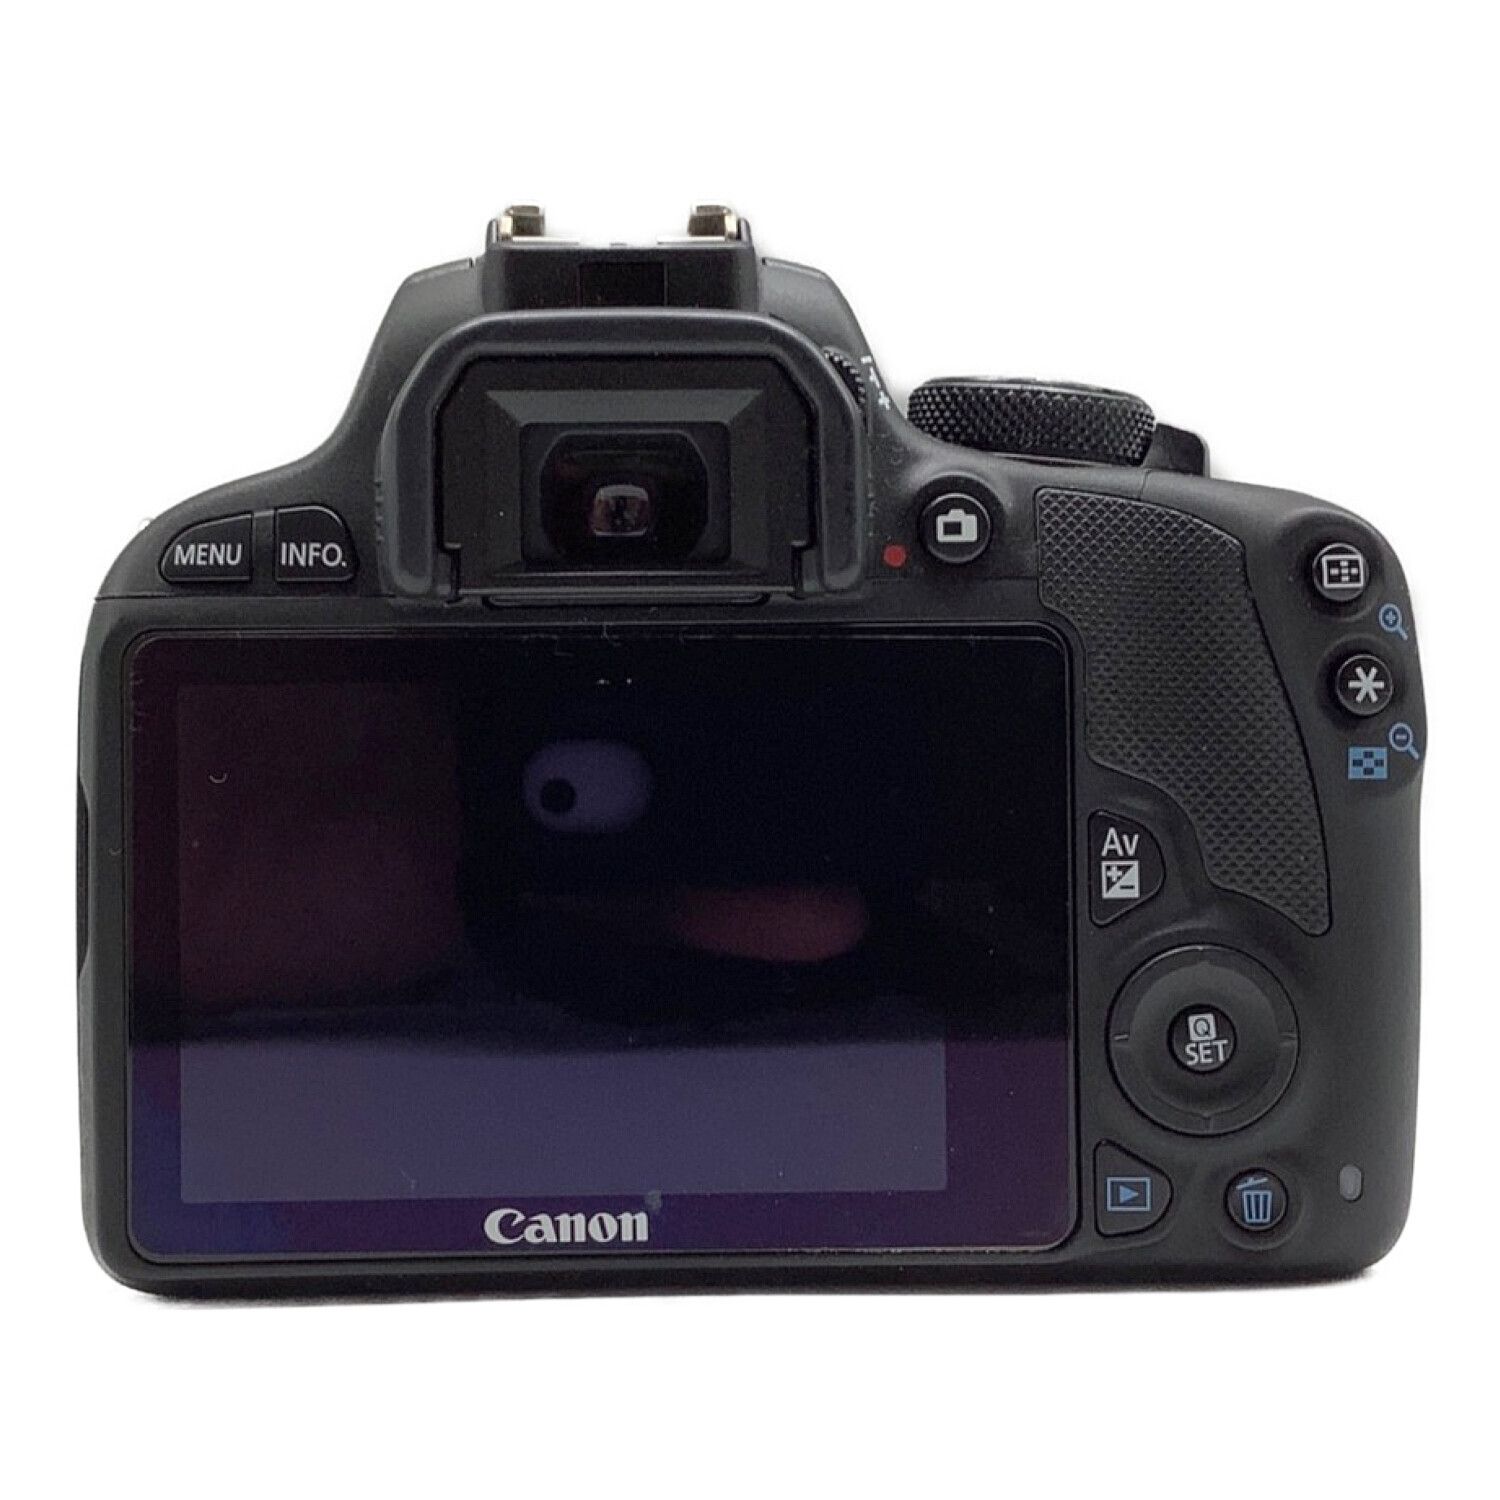 Canon EOS kiss x7i  本体、レンズ、SDカードつき